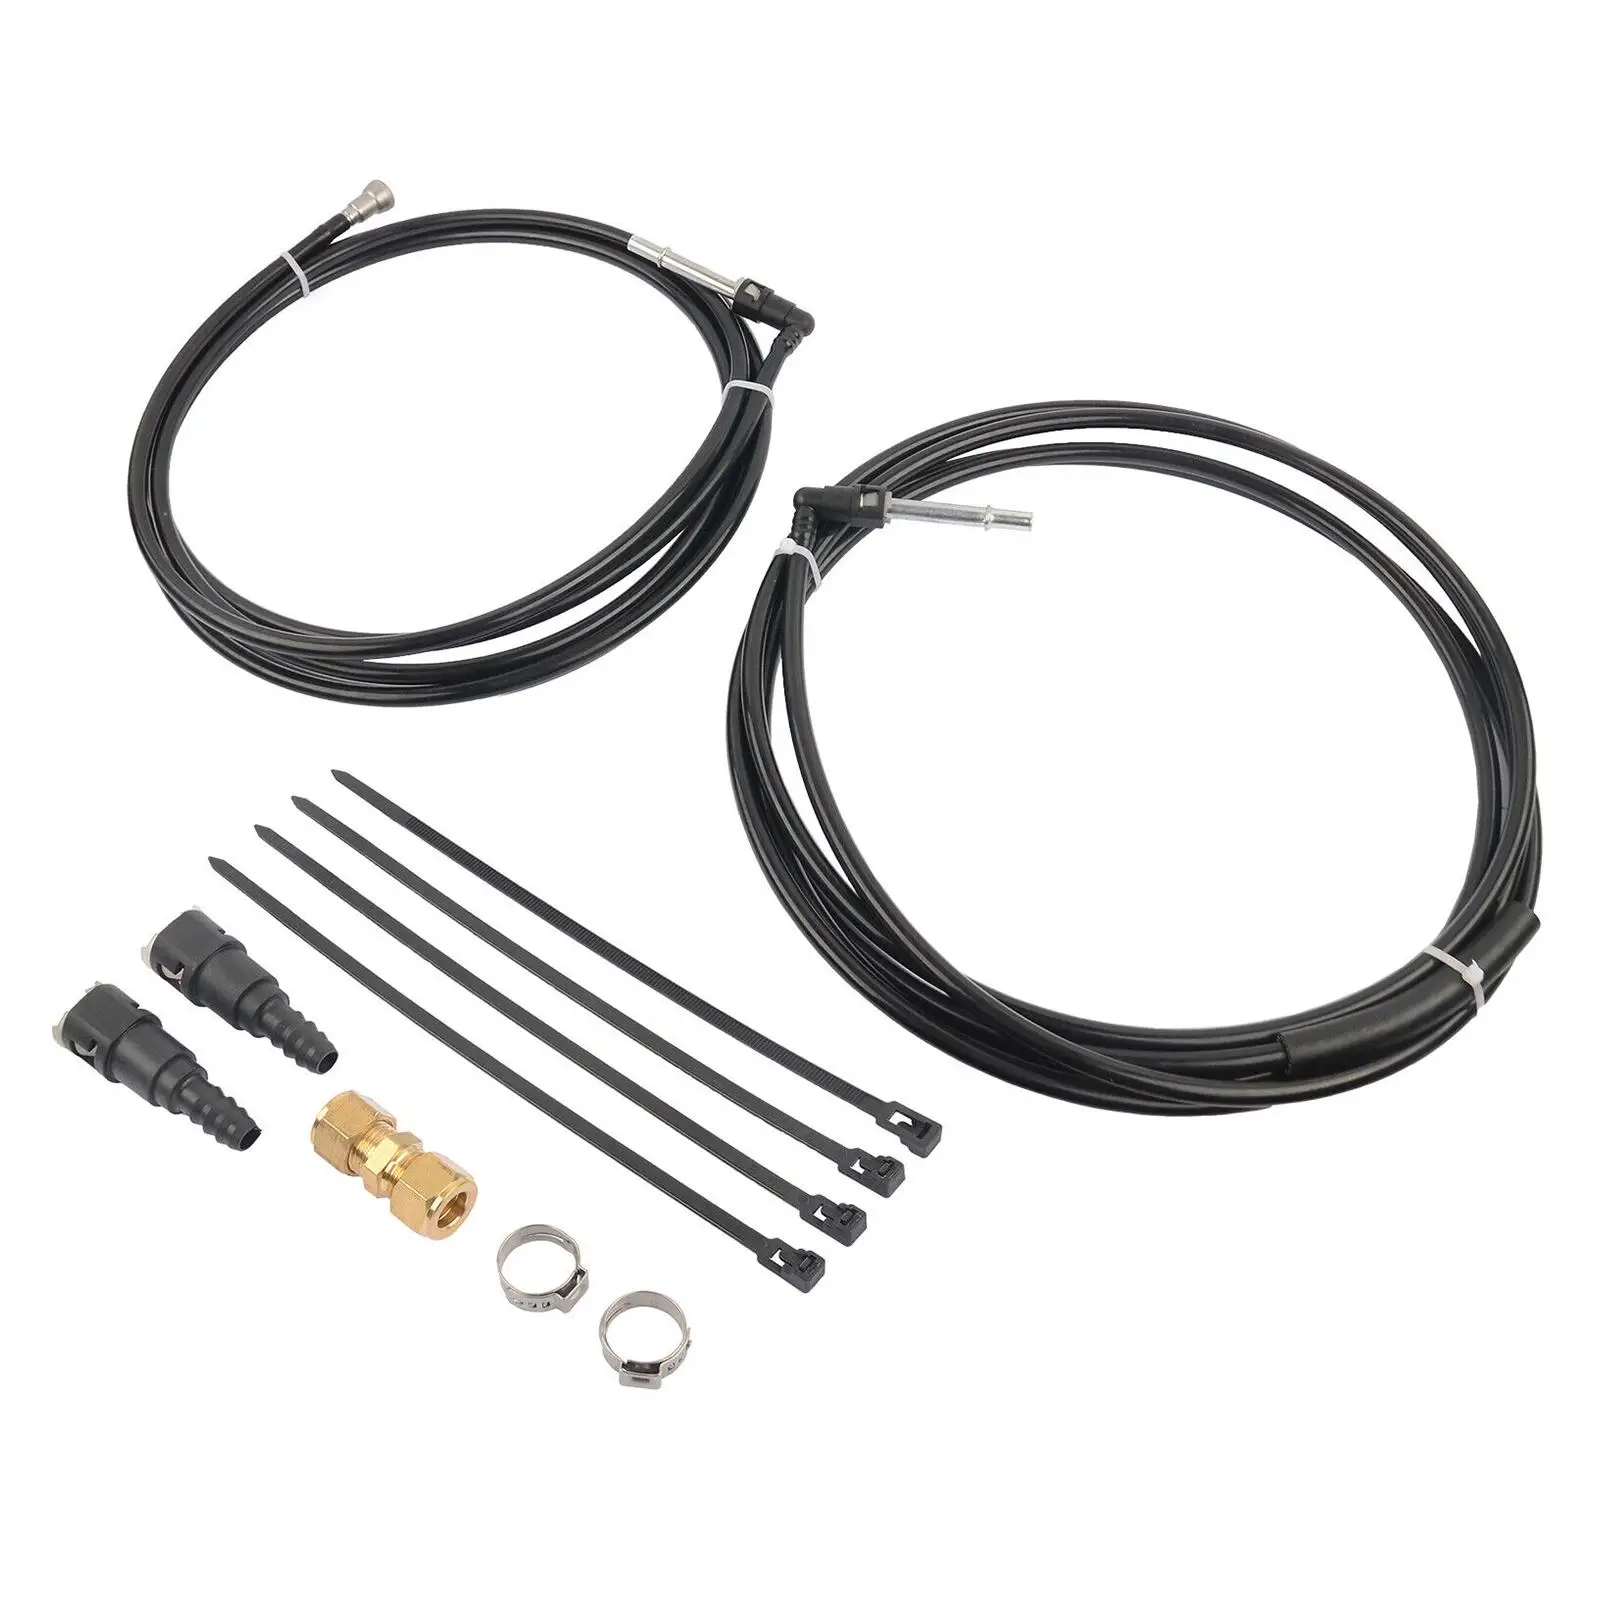 Fuel Lines Kit Fl-fg0340 Sturdy Professional for GMC Sierra Stable Performance Automotive Accessories Convenient Assemble